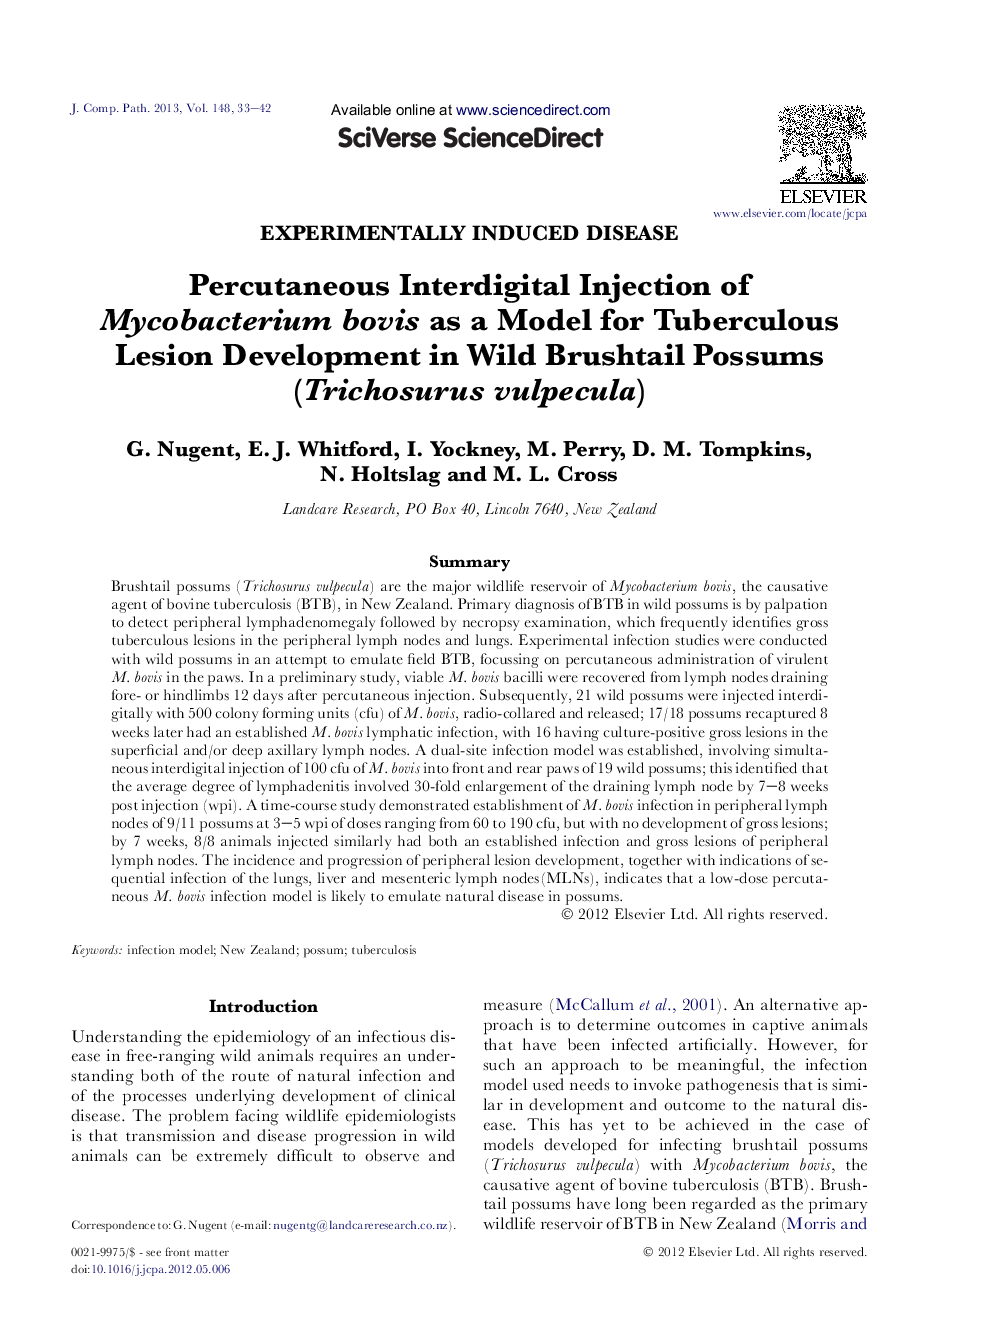 Percutaneous Interdigital Injection of Mycobacterium bovis as a Model for Tuberculous Lesion Development in Wild Brushtail Possums (Trichosurus vulpecula)